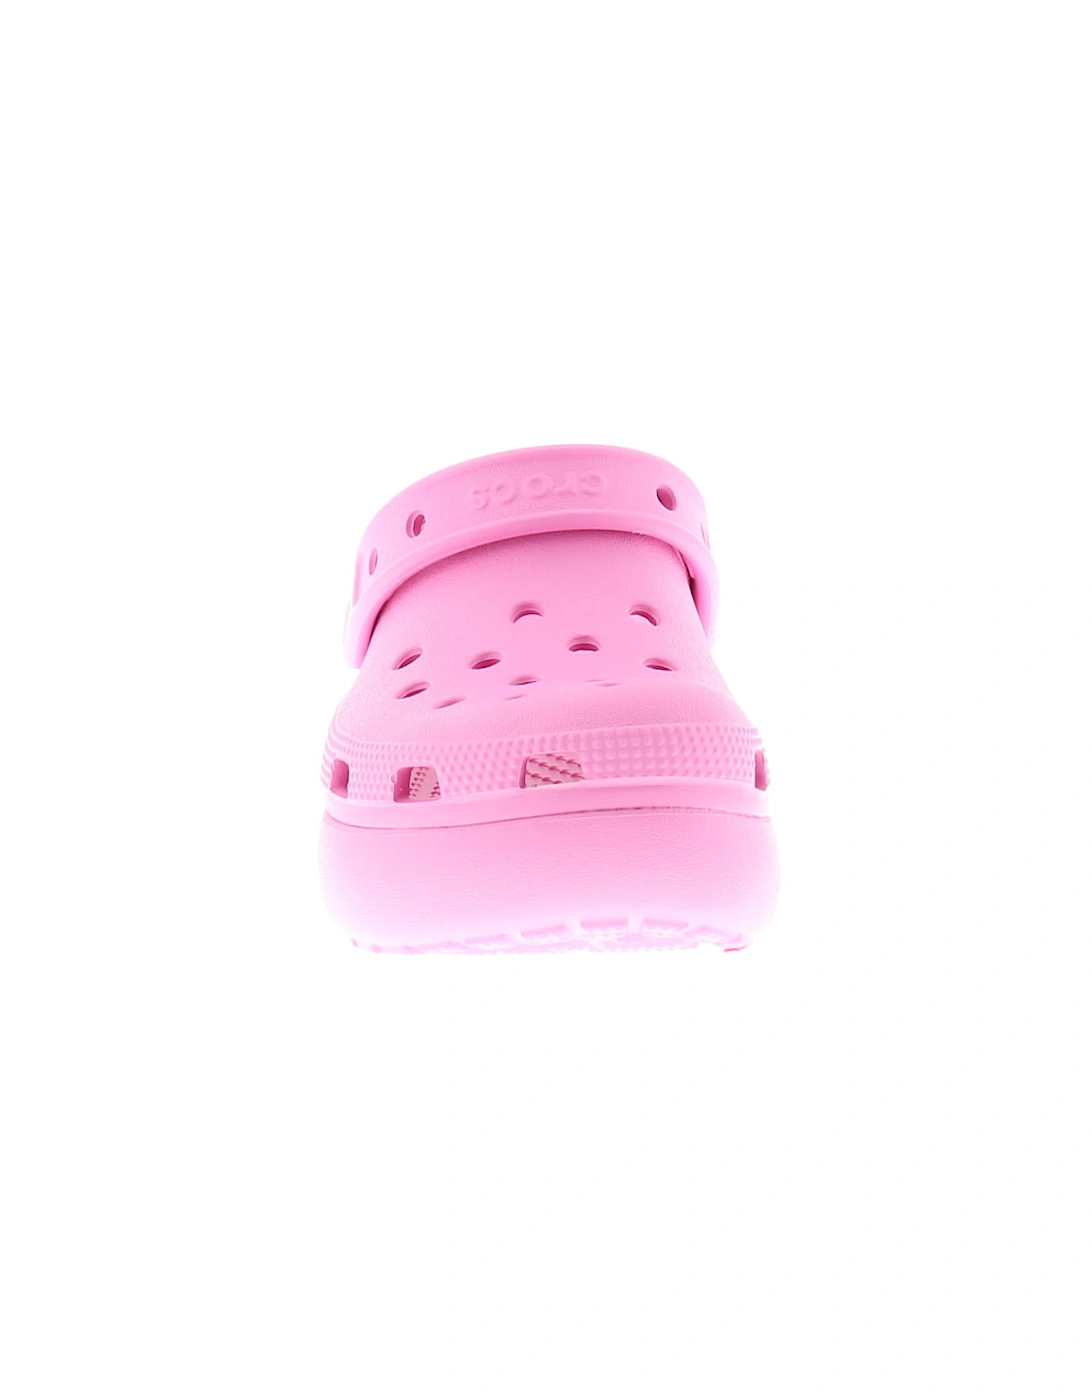 Older Girls Sandals Wedge Clogs Cutie Crush Clog Slip On pink UK Size